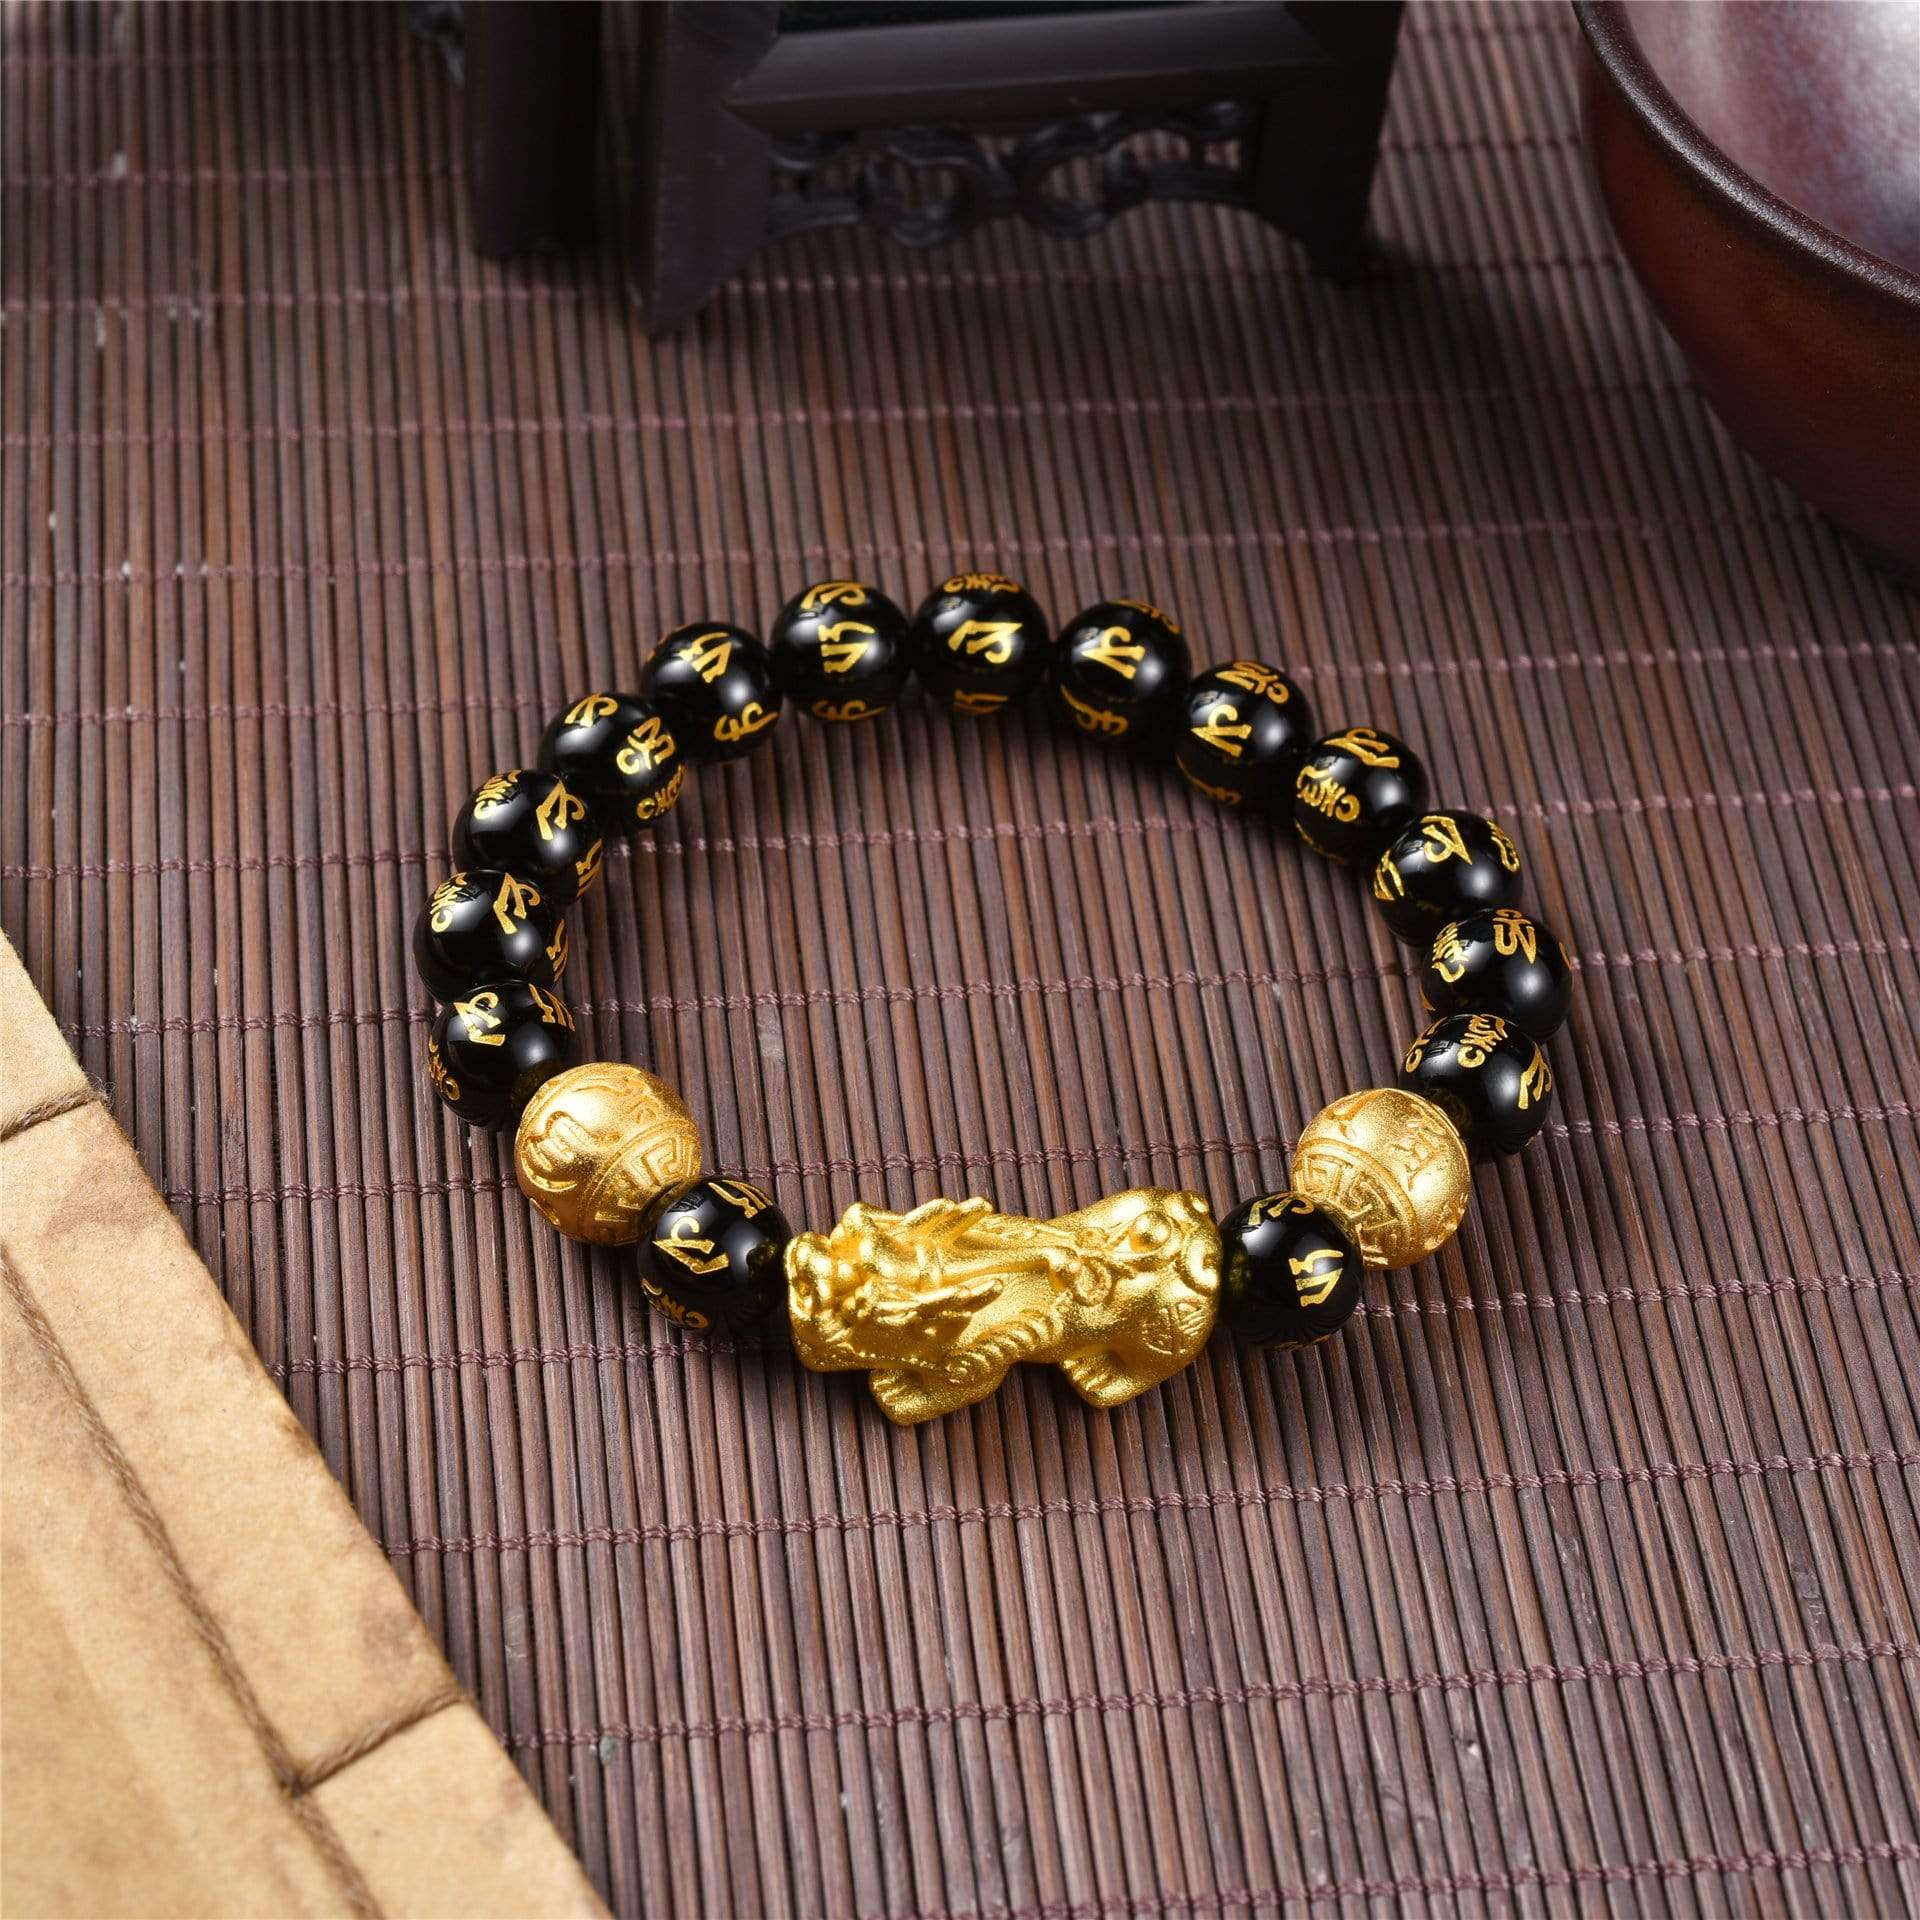 Fortunehouses Bracelet Feng Shui Pixiu Black Obsidian Wealth Bracelet